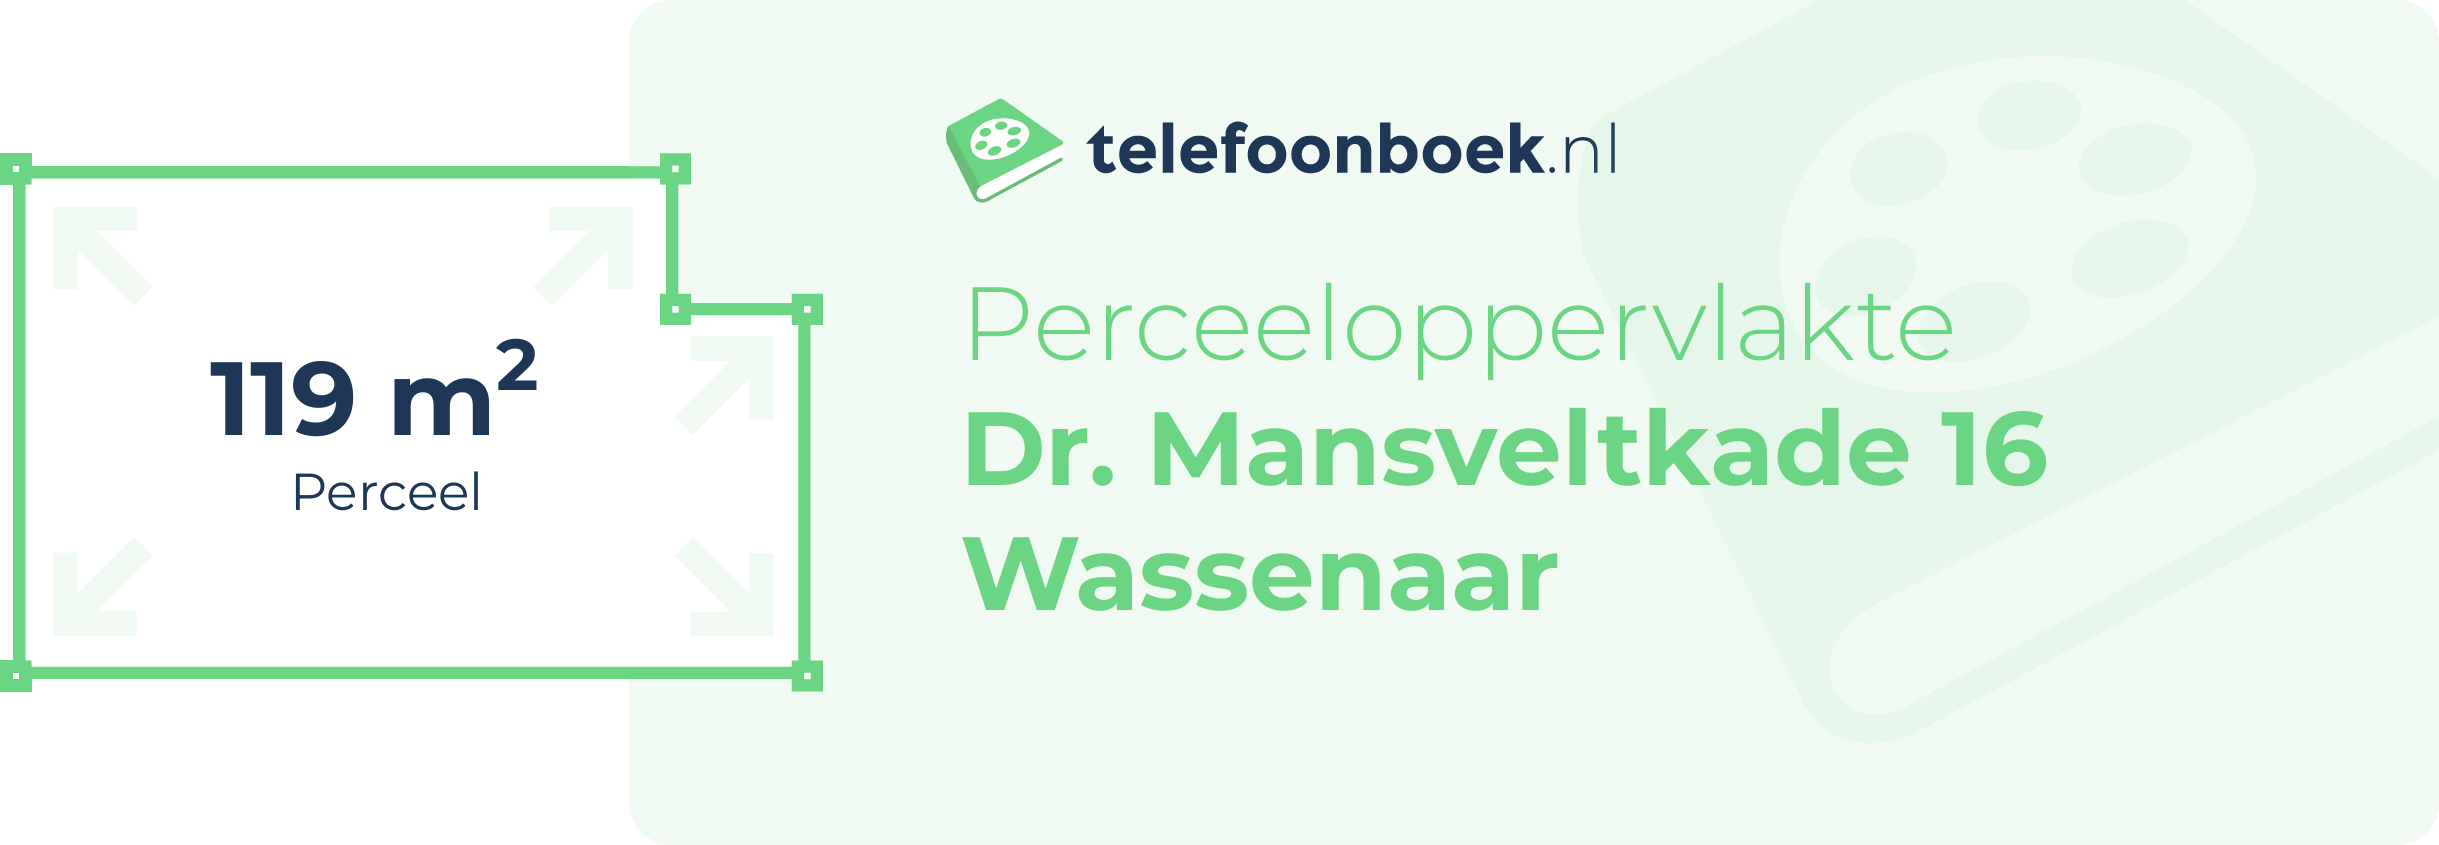 Perceeloppervlakte Dr. Mansveltkade 16 Wassenaar